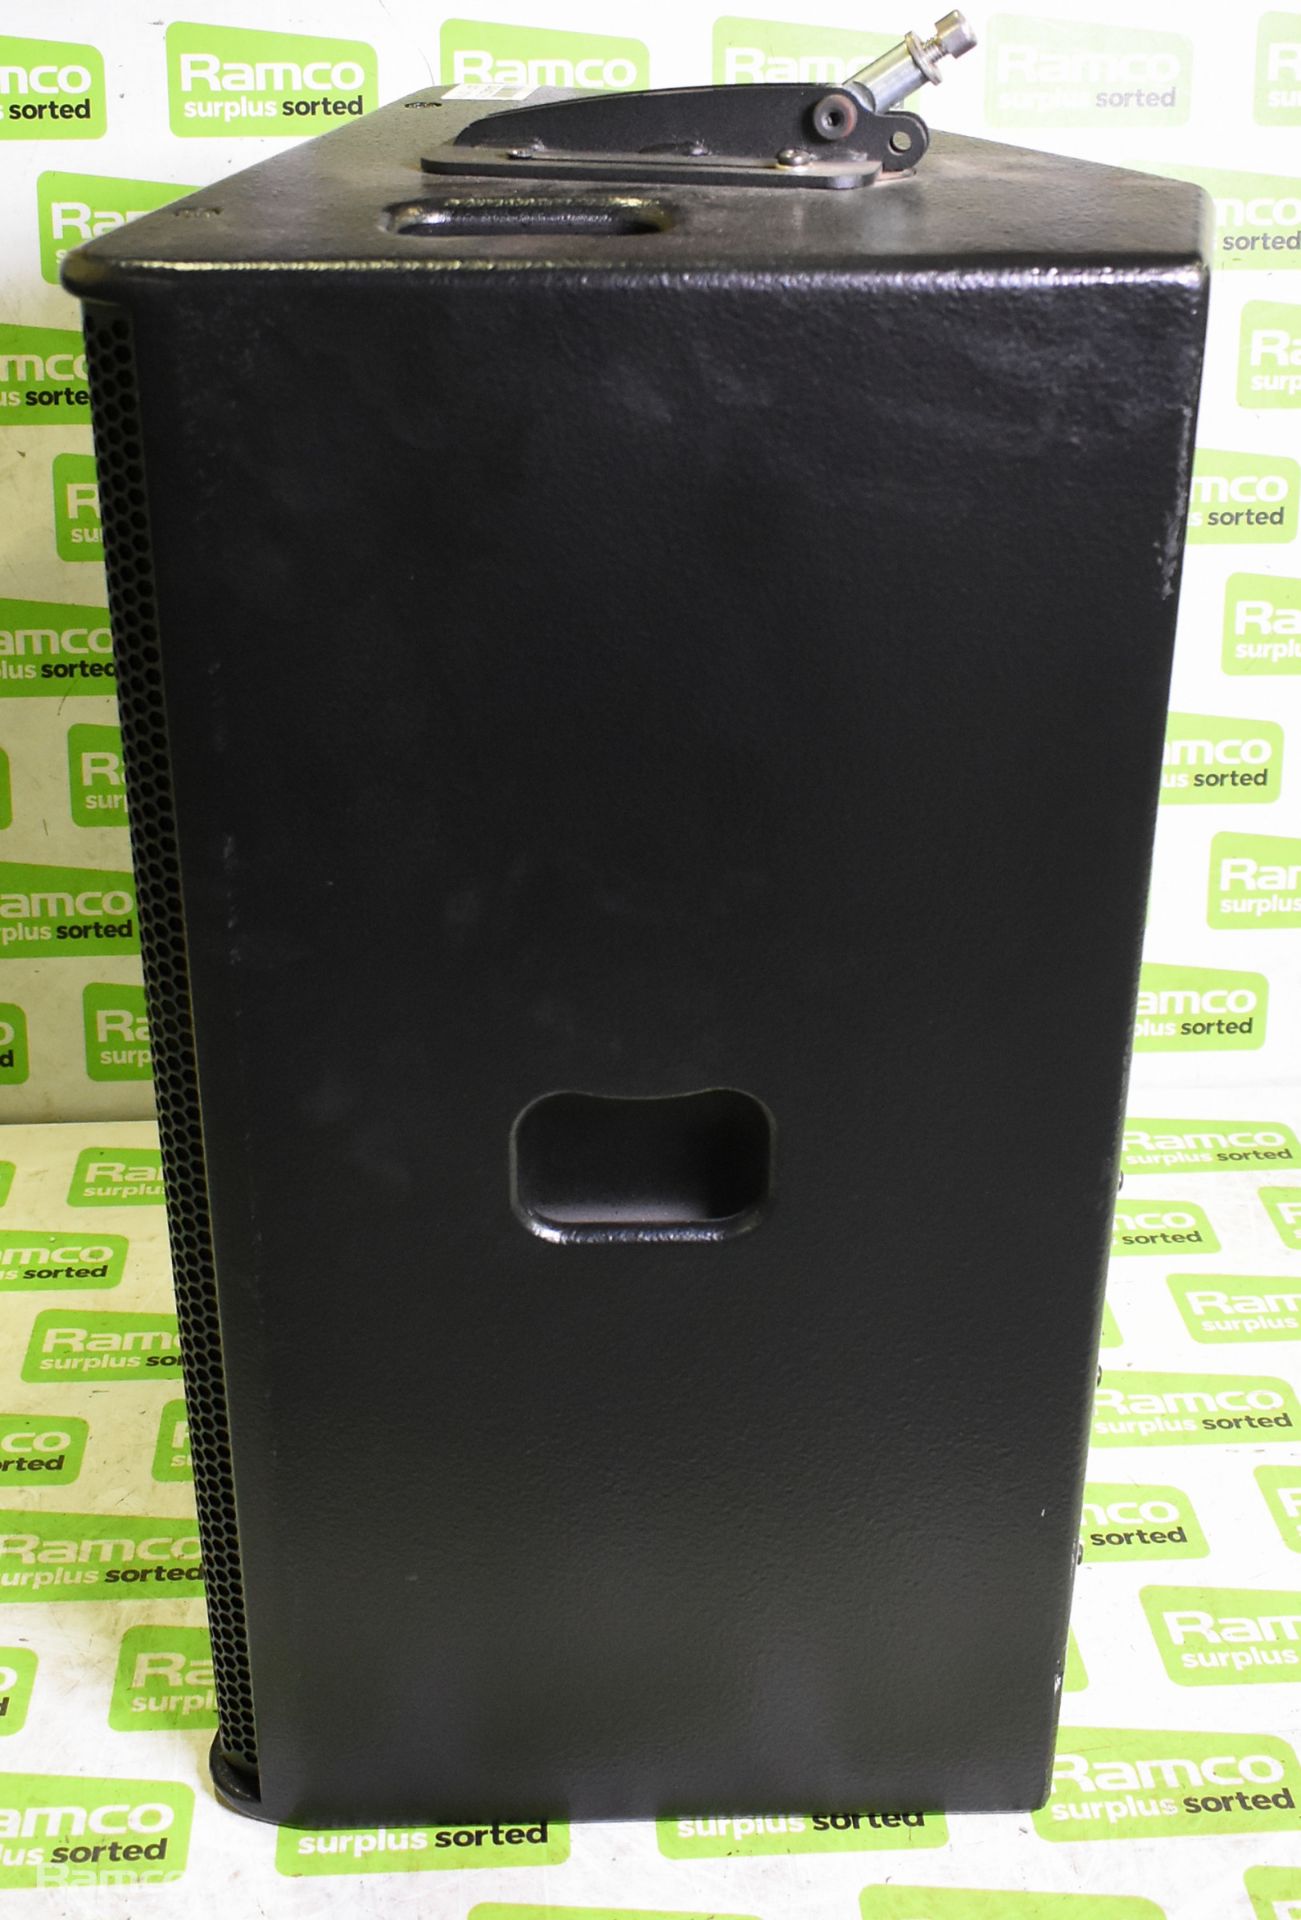 NEXO PS-15 UL - 15 inch 2-Way loudspeaker left - Black - W 440 x D 370 x H 700 mm - Image 6 of 8